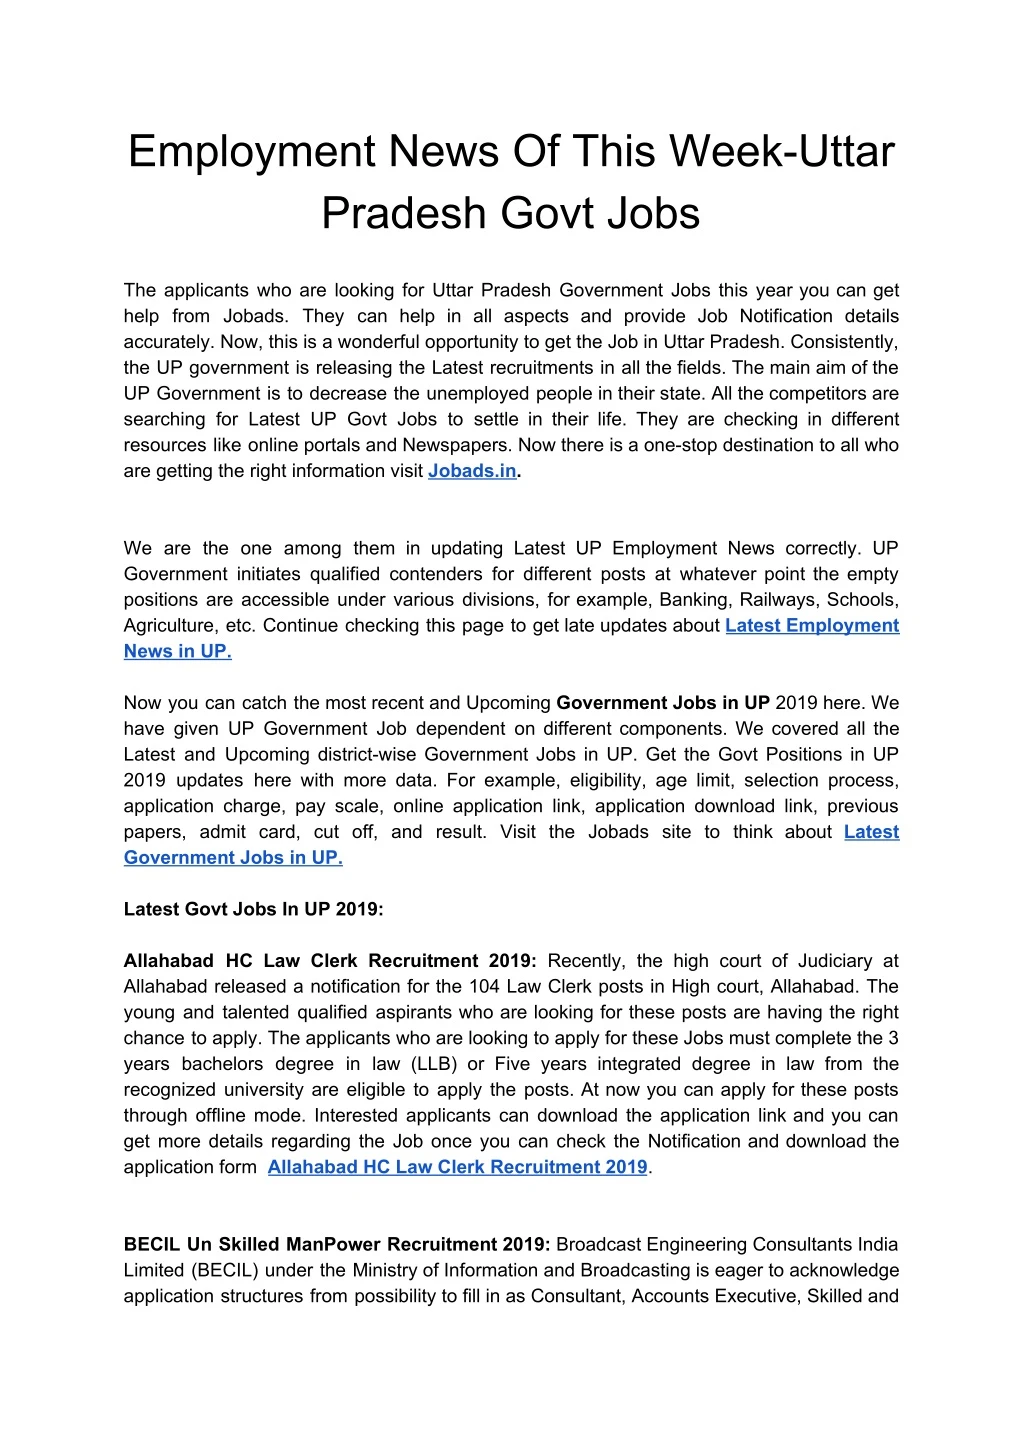 employment news of this week uttar pradesh govt